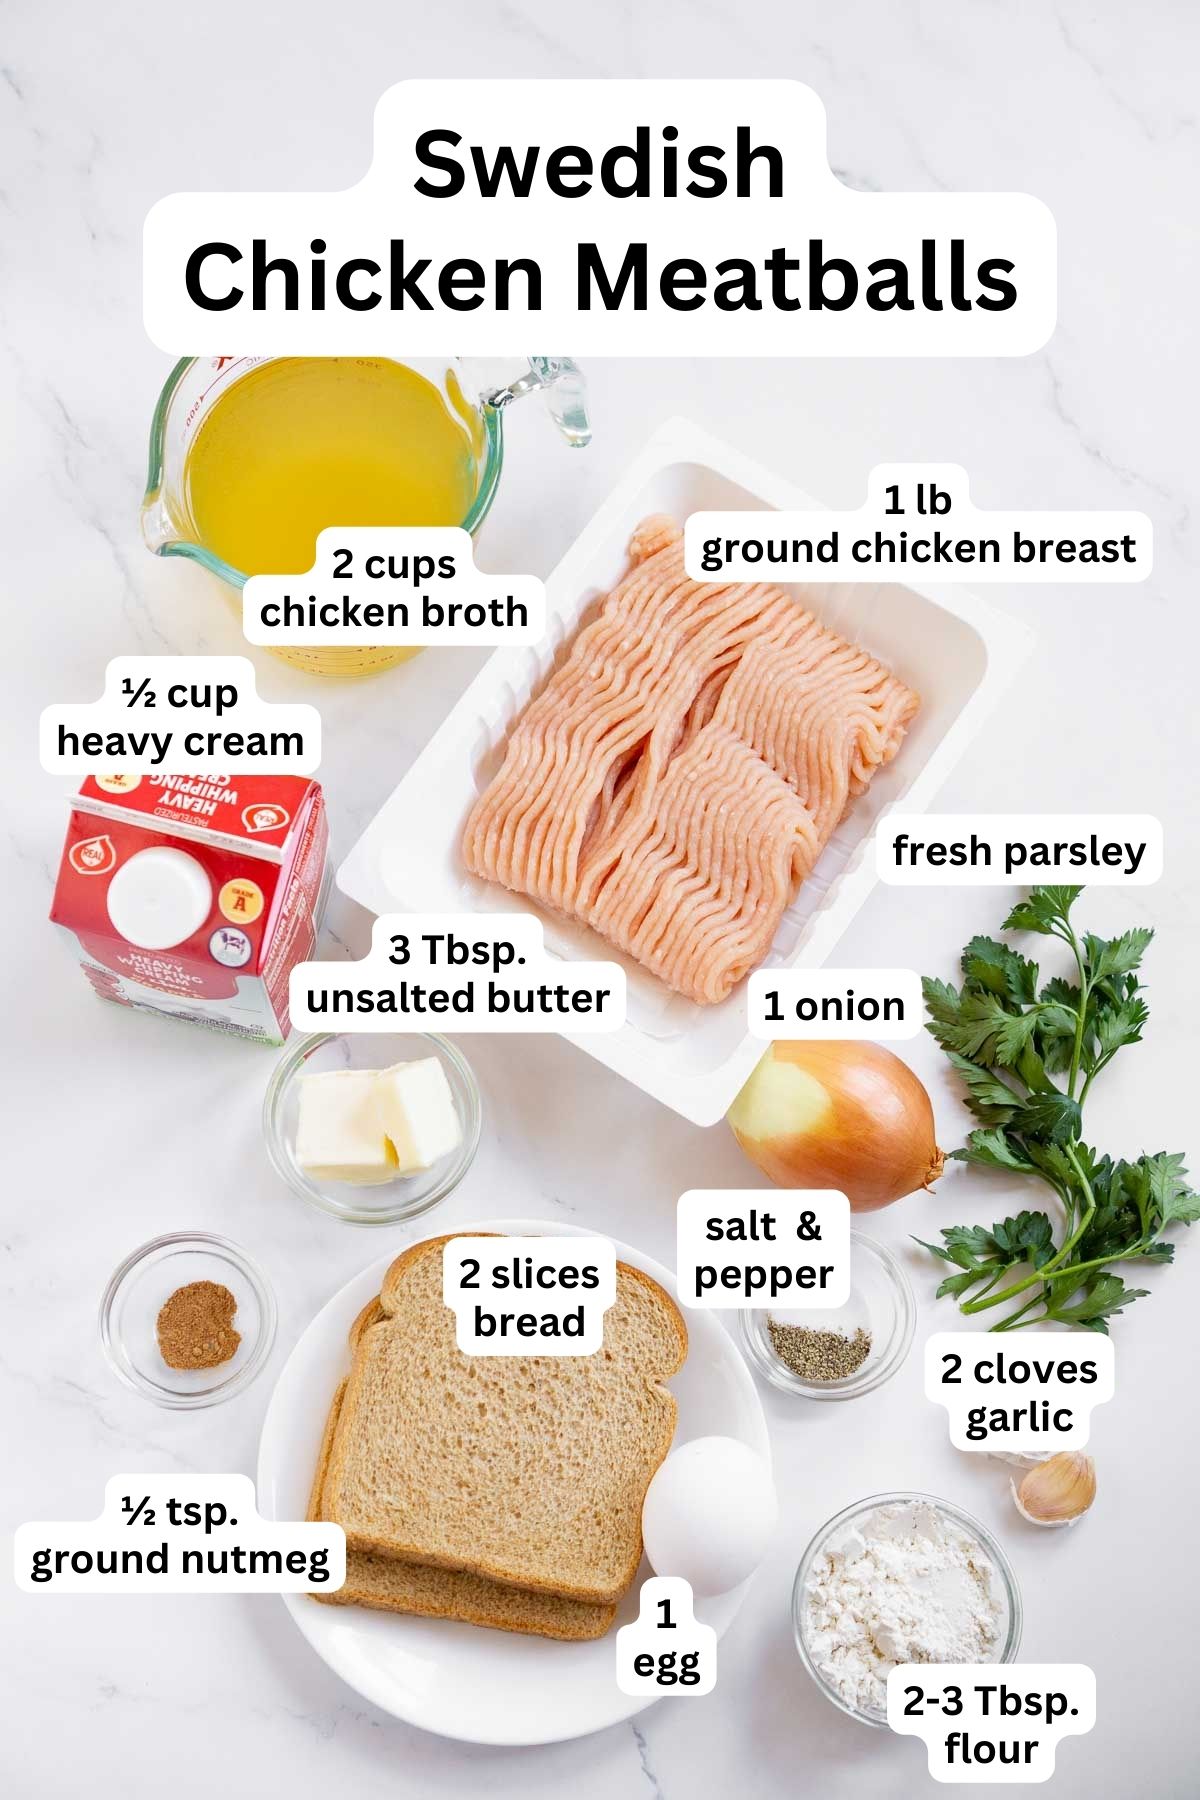 Ingredients to make Swedish chicken meatballs